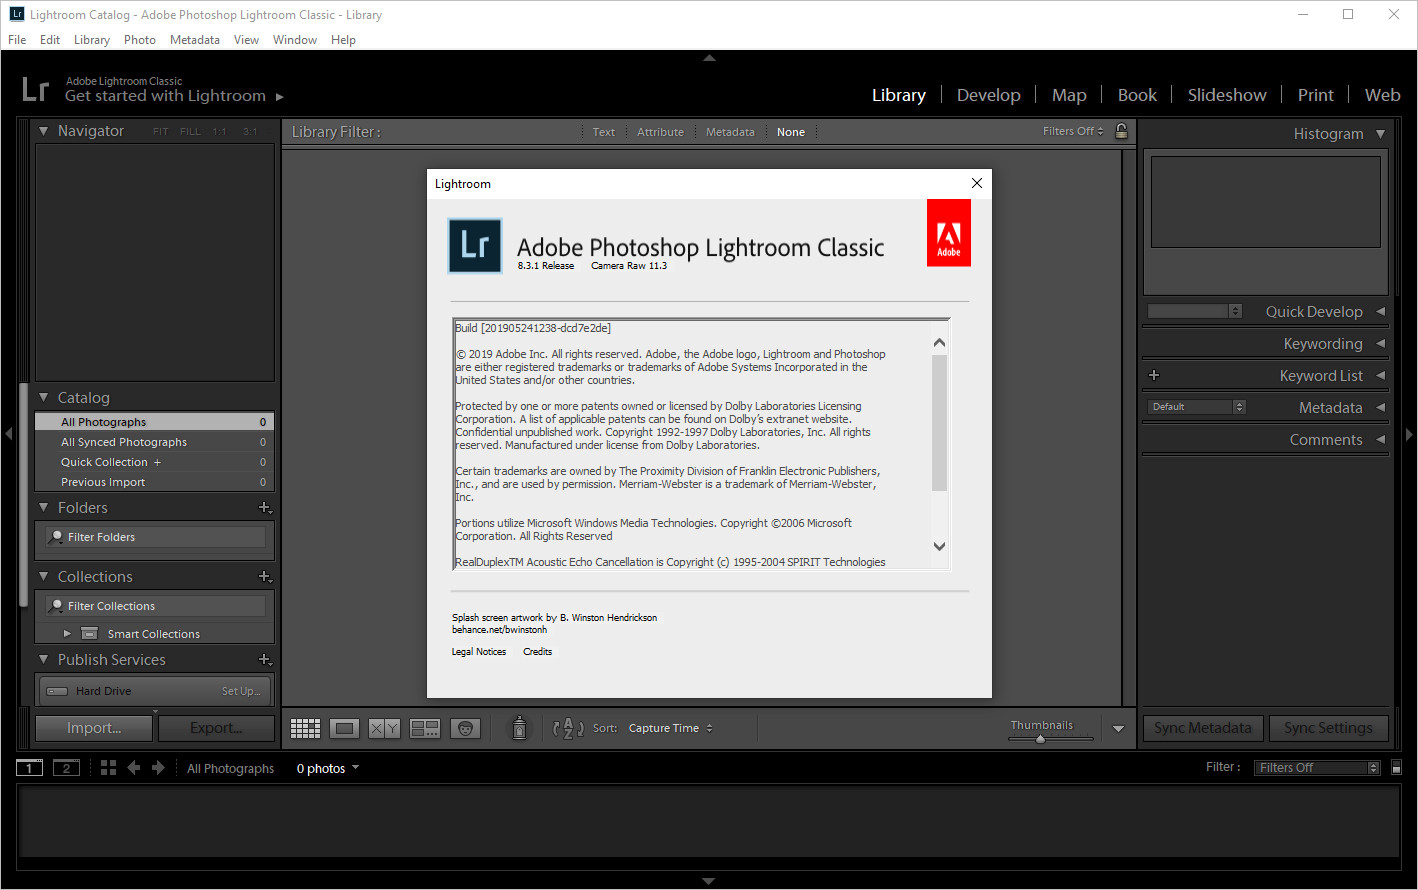 Adobe Photoshop Lightroom Classic CC 2019 v8.3